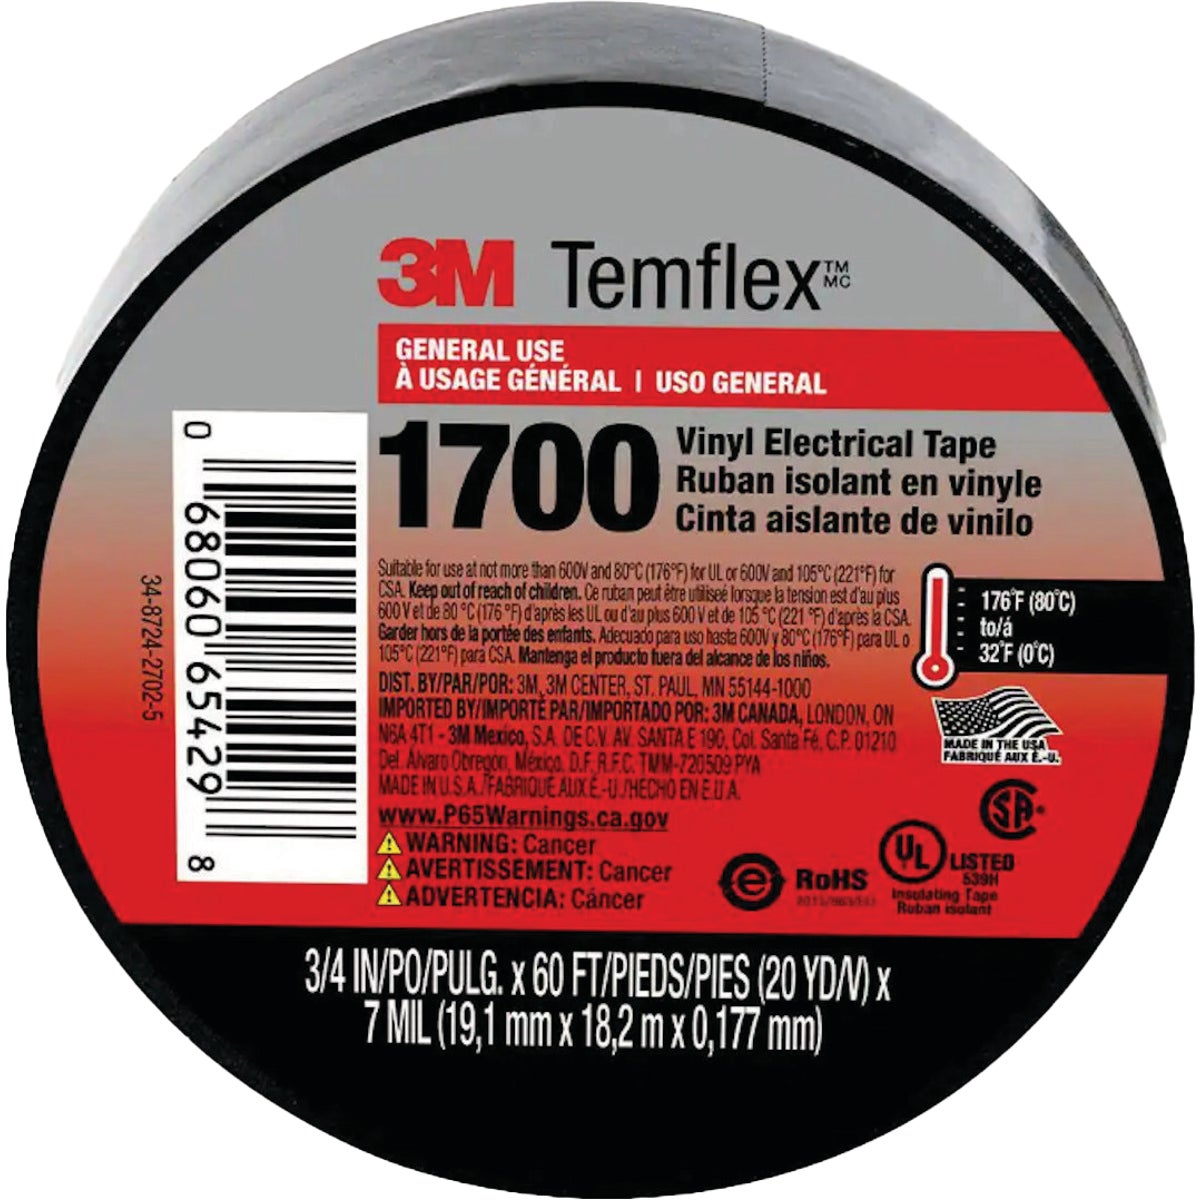 3M Temflex 1700 General Purpose 3/4 In. x 60 Ft. Electrical Tape